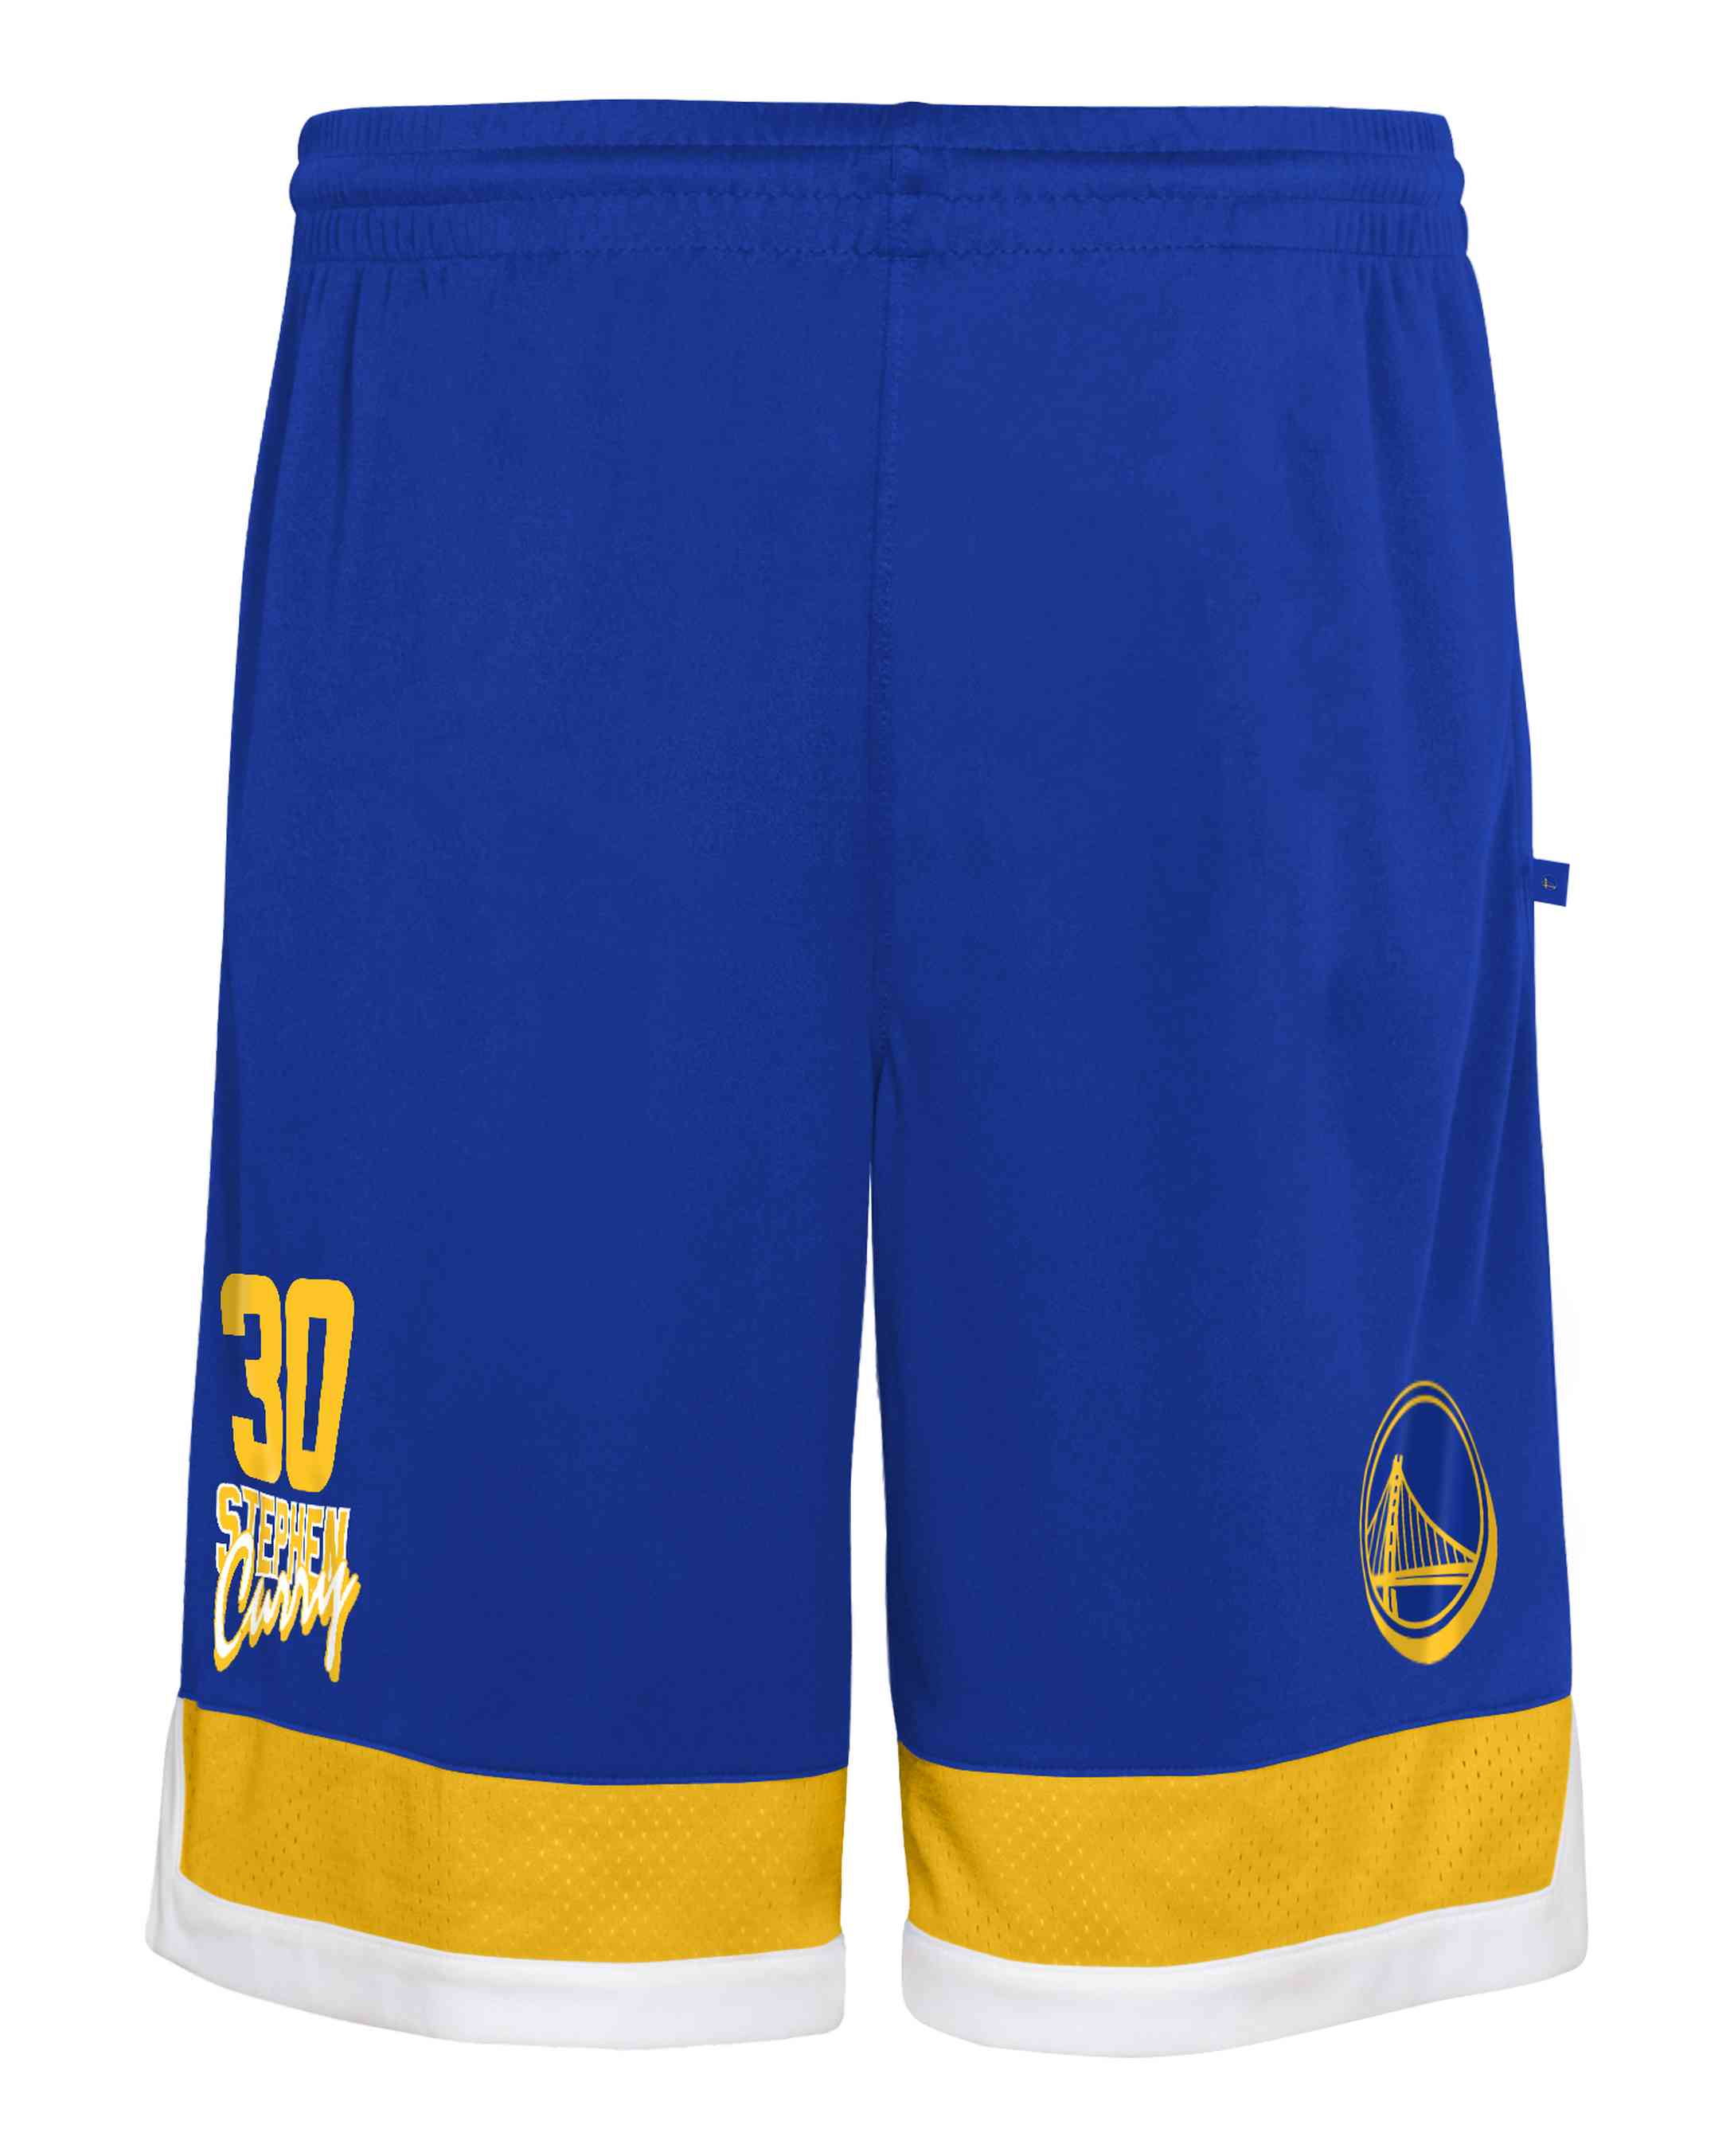 Outerstuff - NBA Golden State Warriors Stephen Curry Active Basketball Shorts